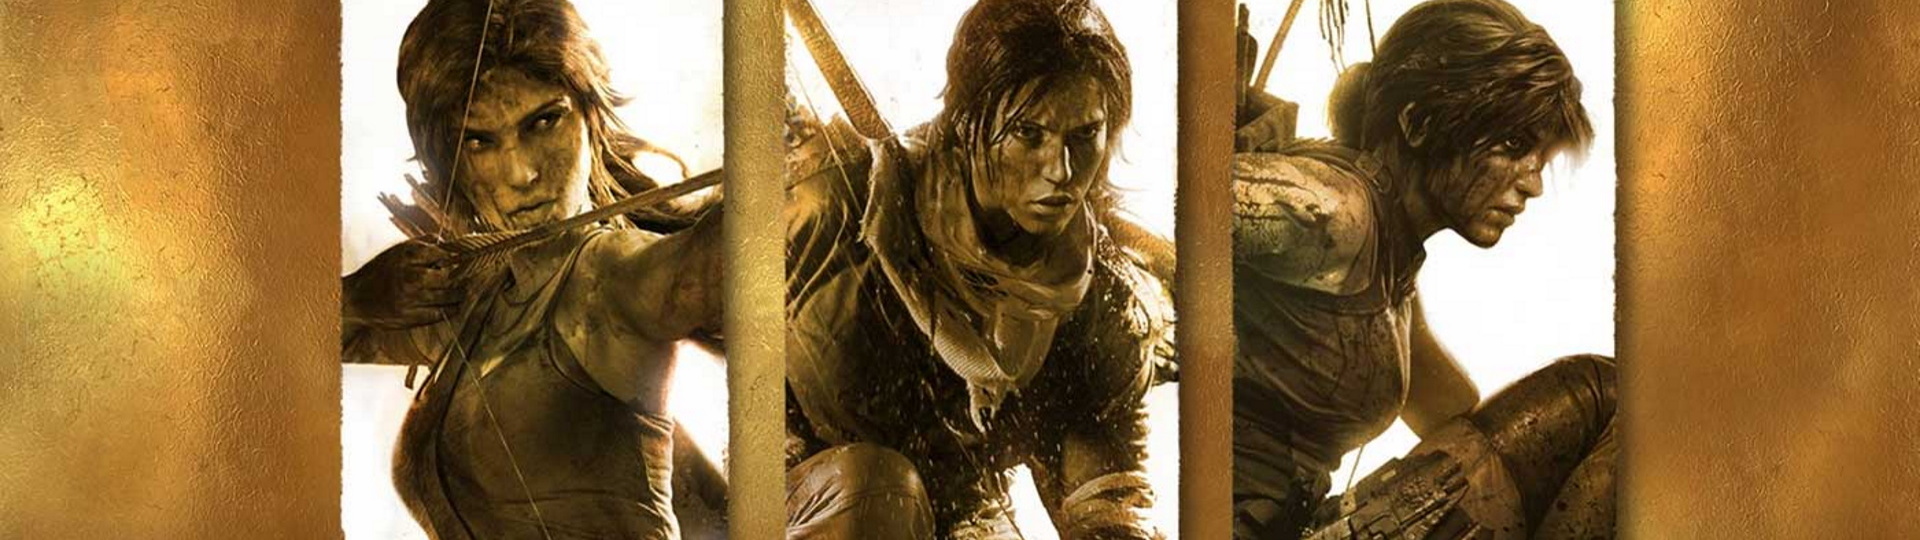 Prozrazena trilogie Tomb Raider: Definitive Survivor Trilogy | Novinky